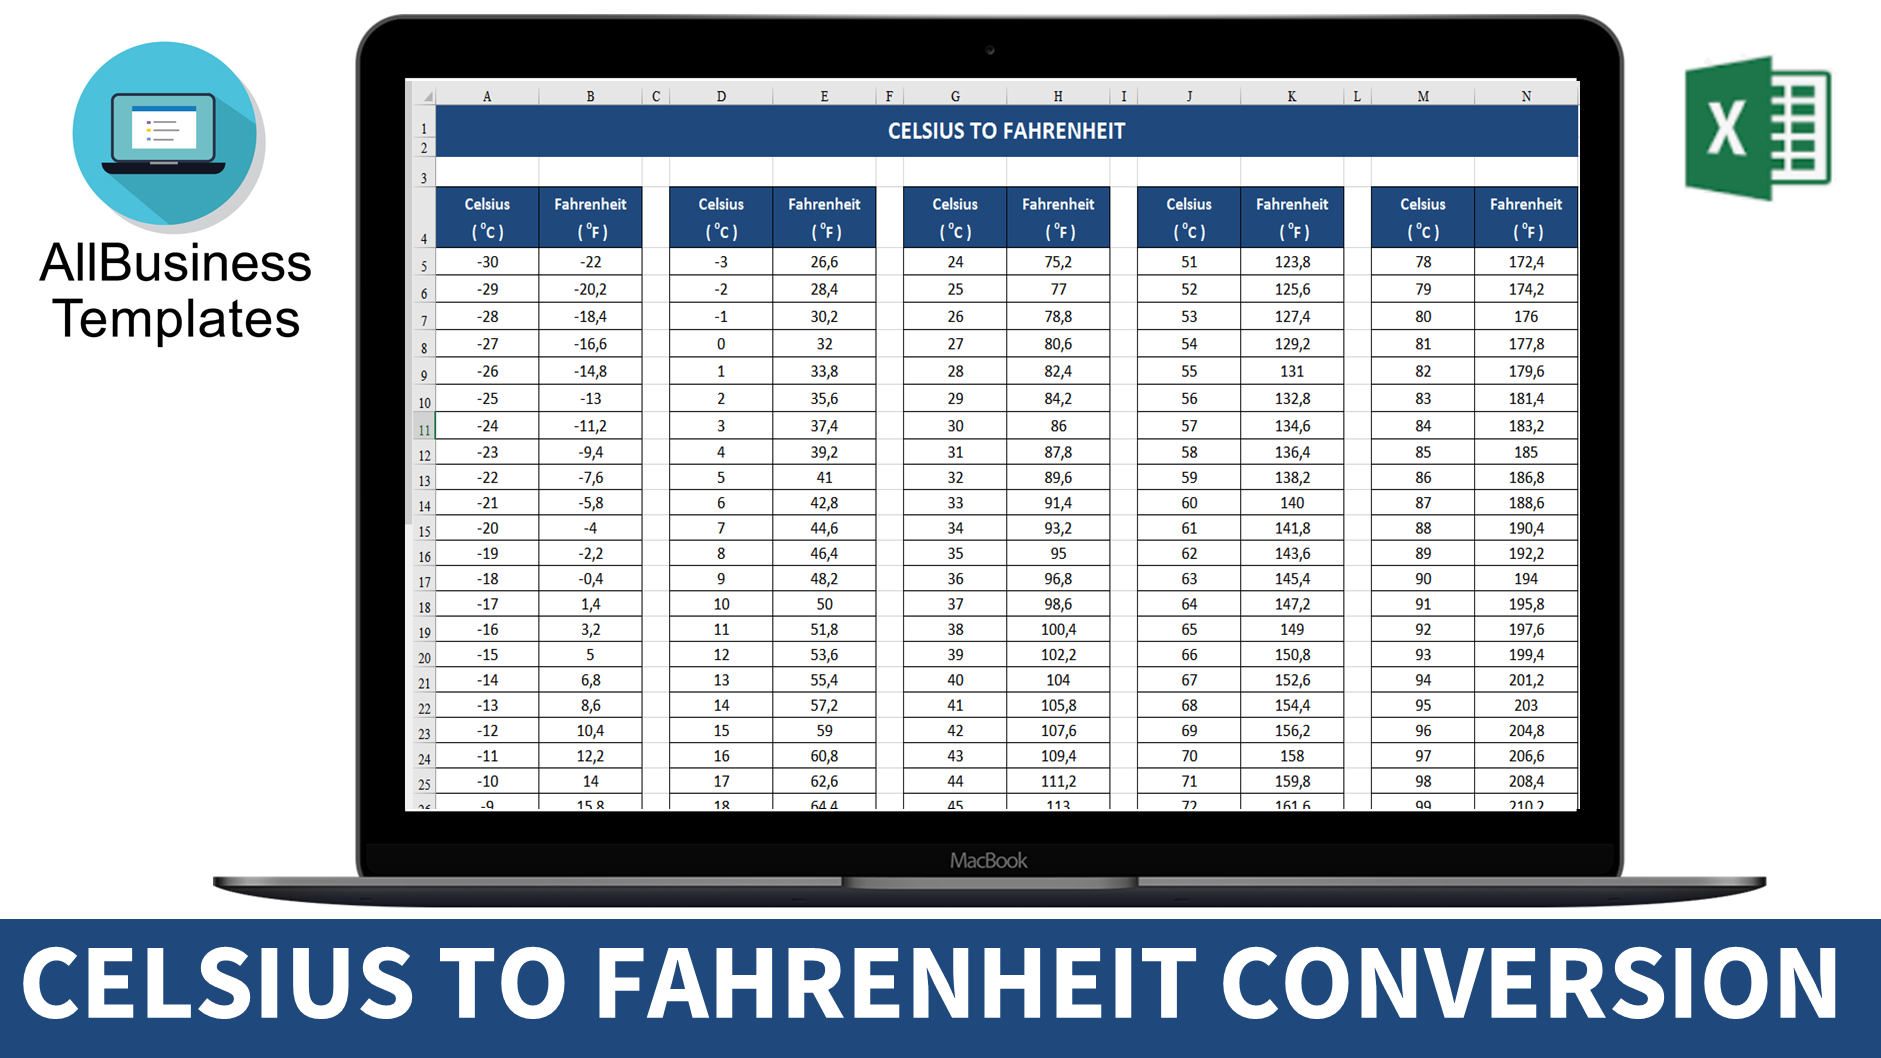 Celsius to Fahrenheit conversion chart 模板